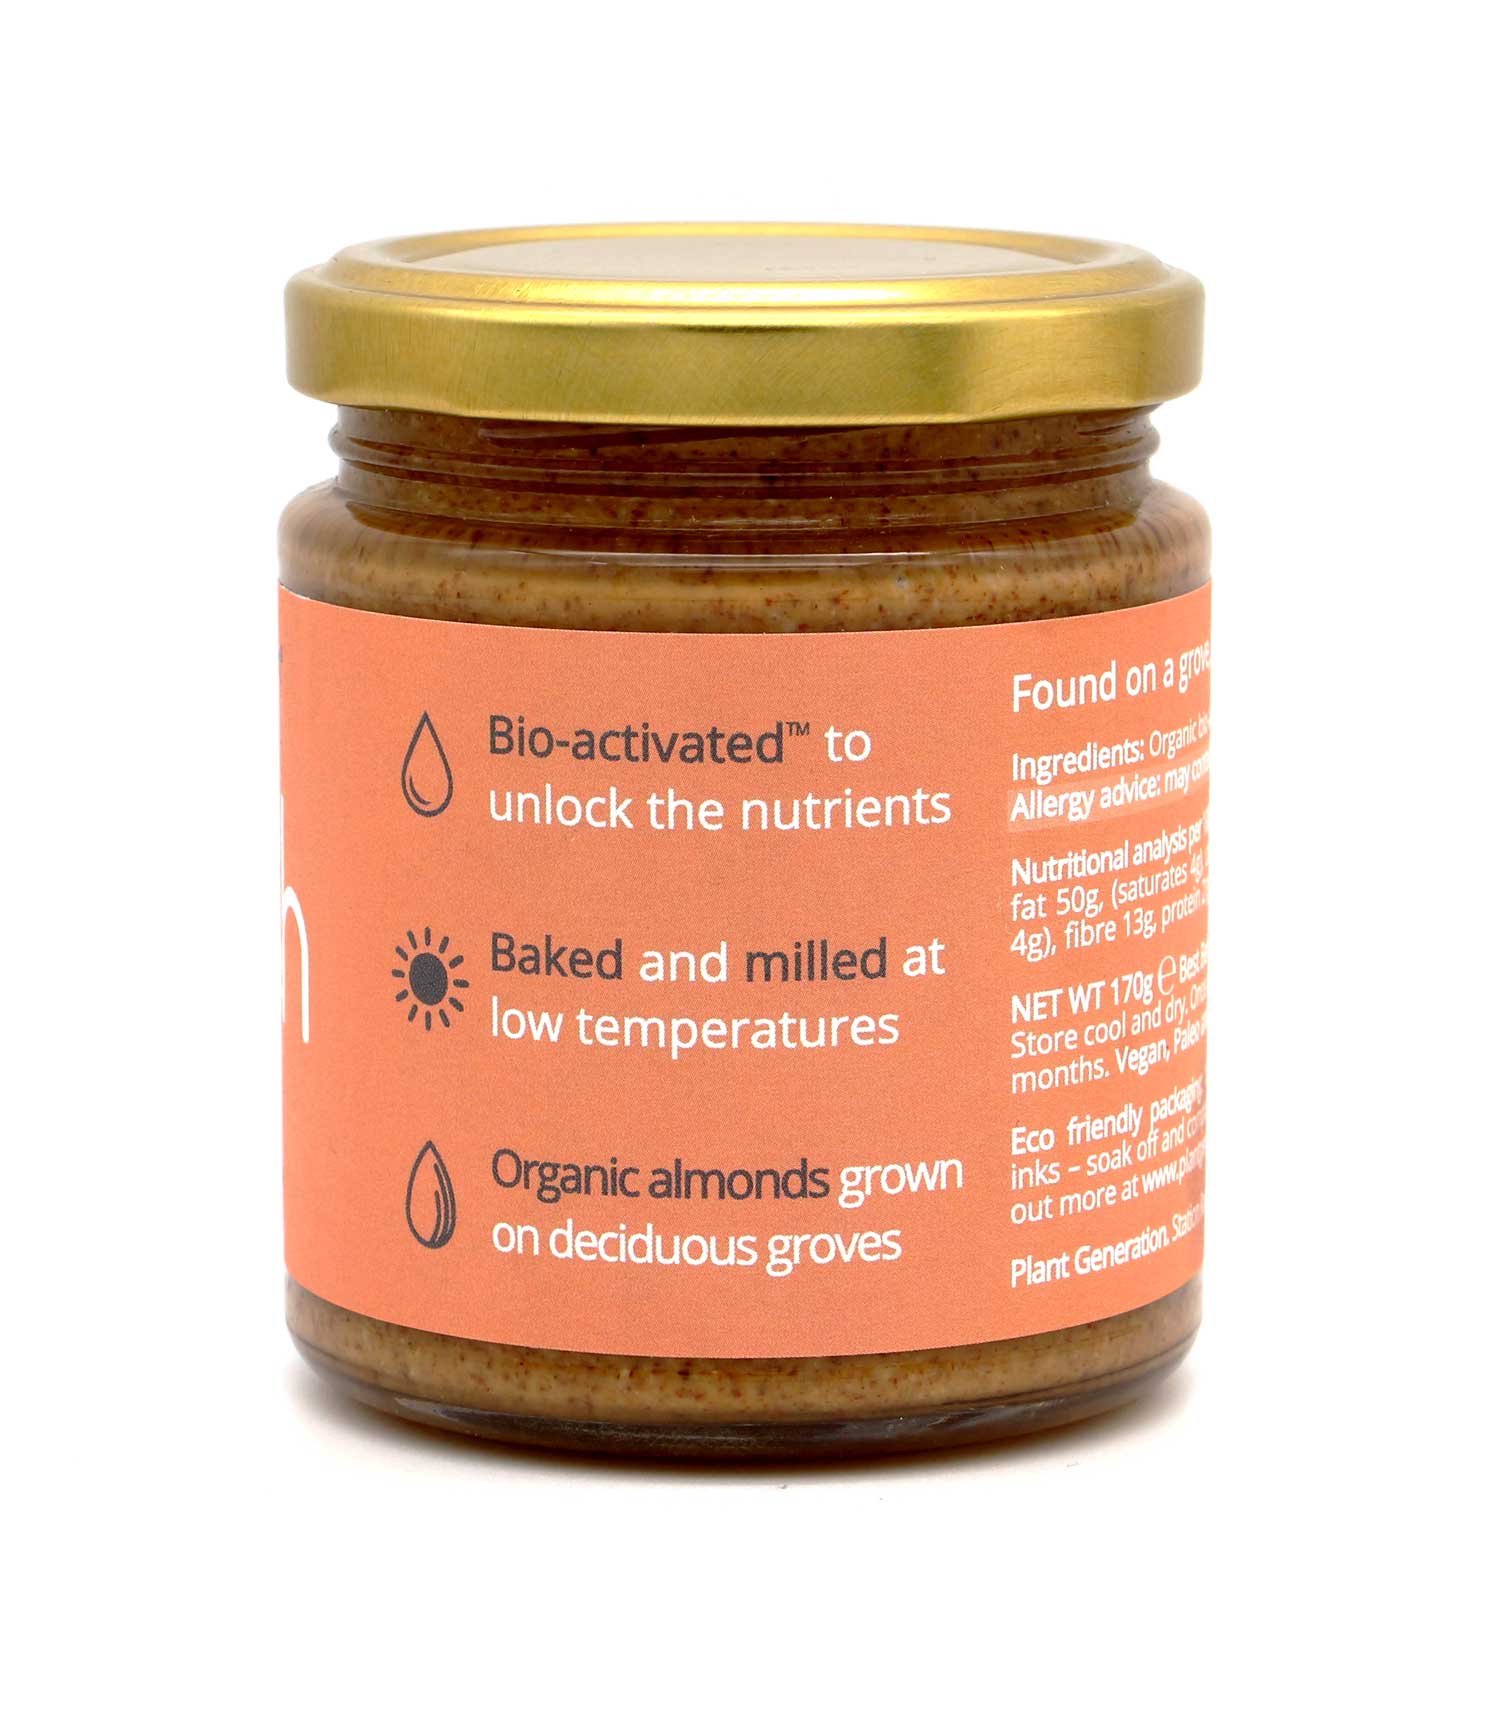 Detailed label on almond jar